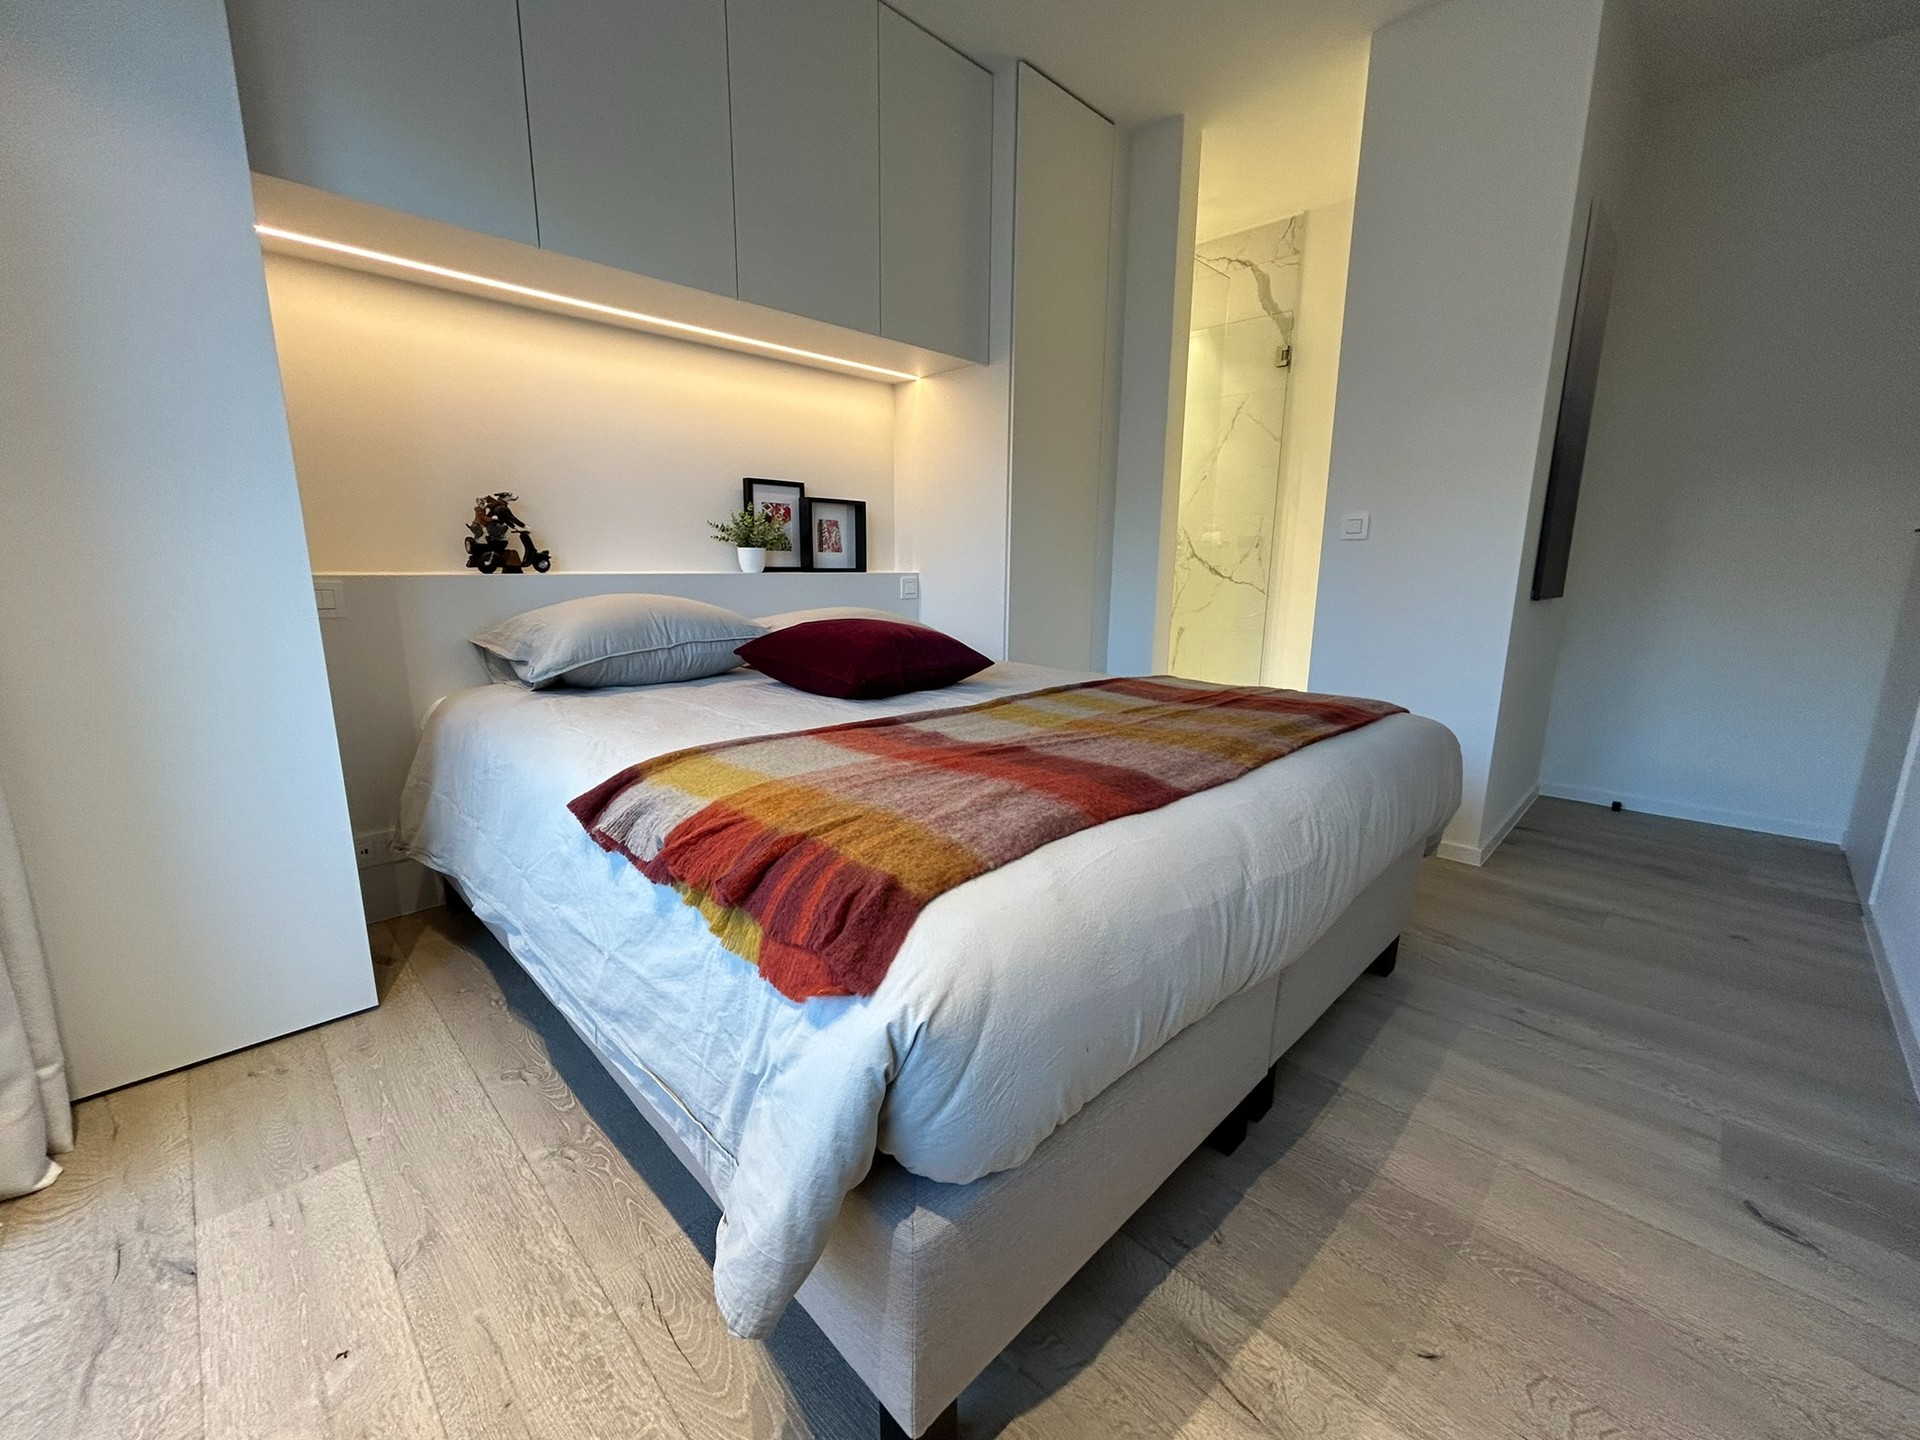 Gerenoveerd appartement met drie slaapkamers te Knokke - centrum foto 9